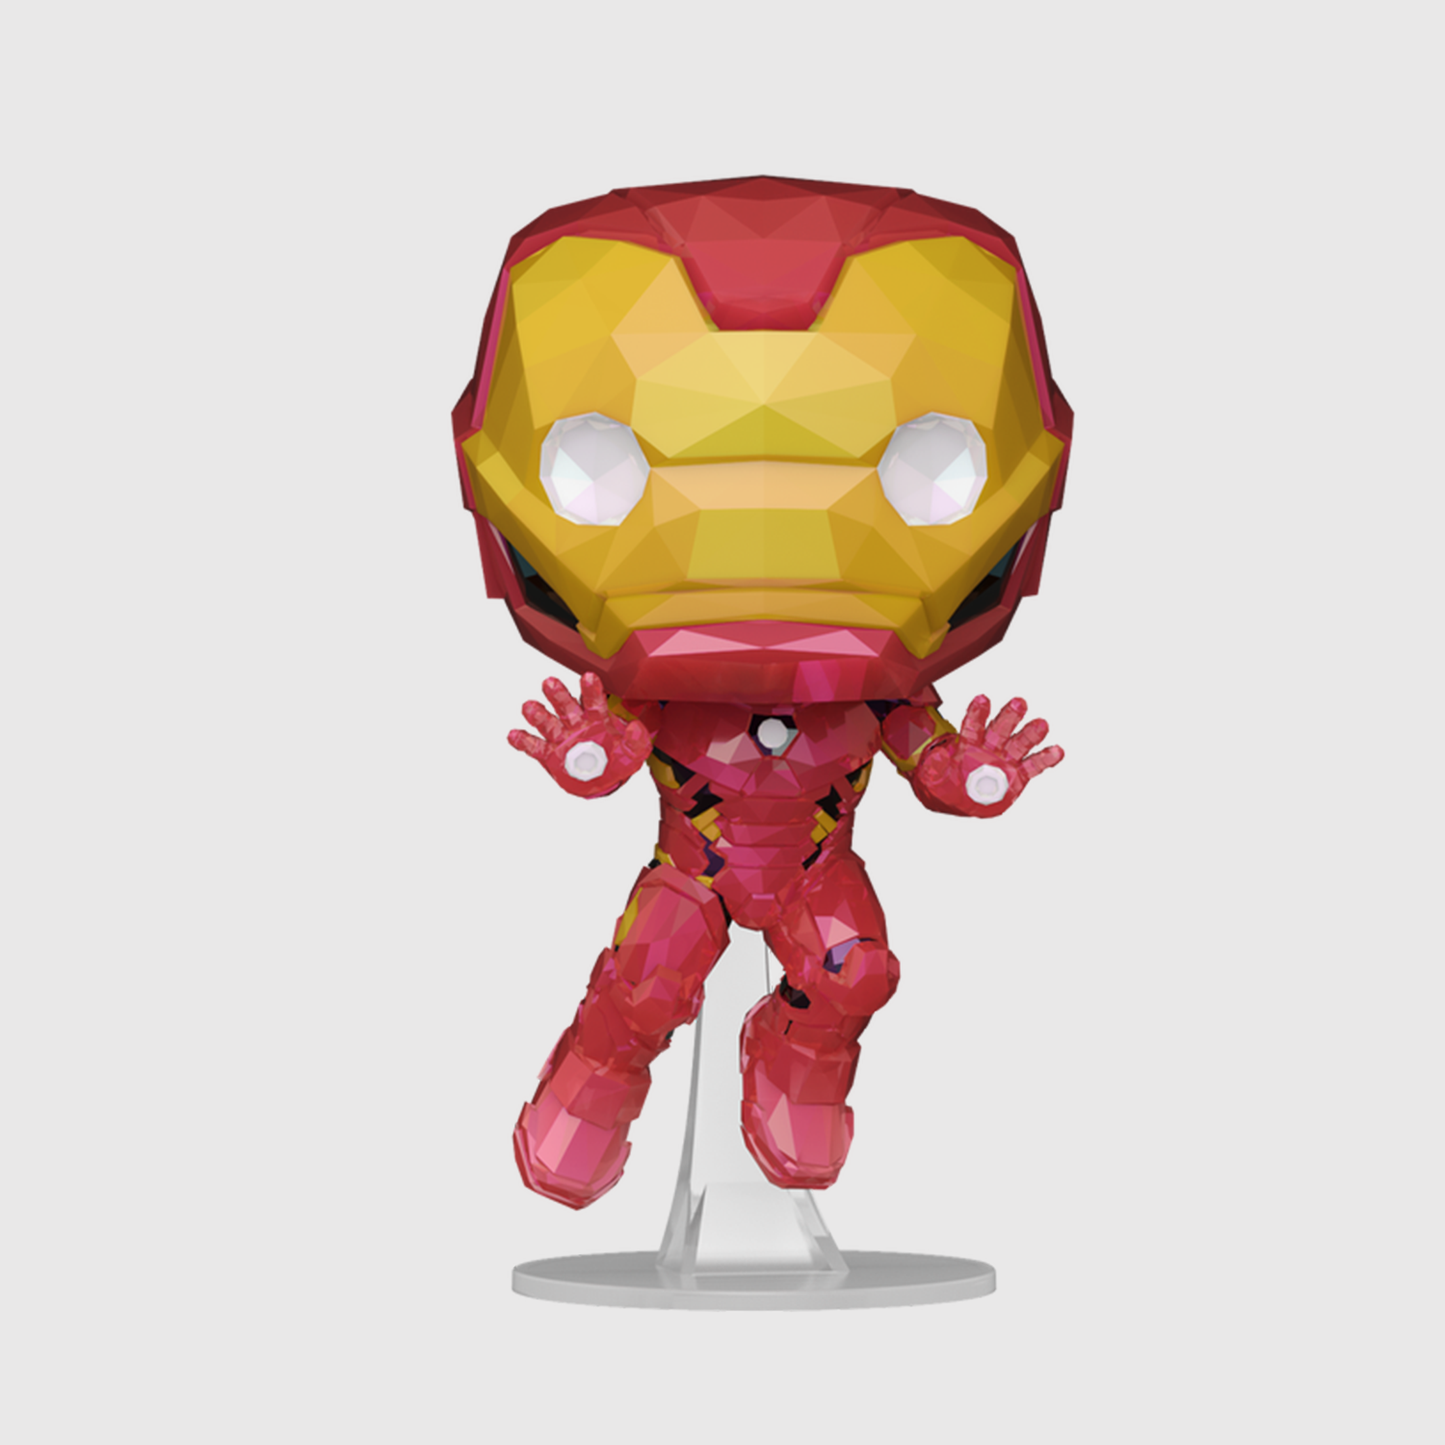 (PRE-ORDER) Funko POP! Marvel: Iron Man Facet (Funko Shop) #1268